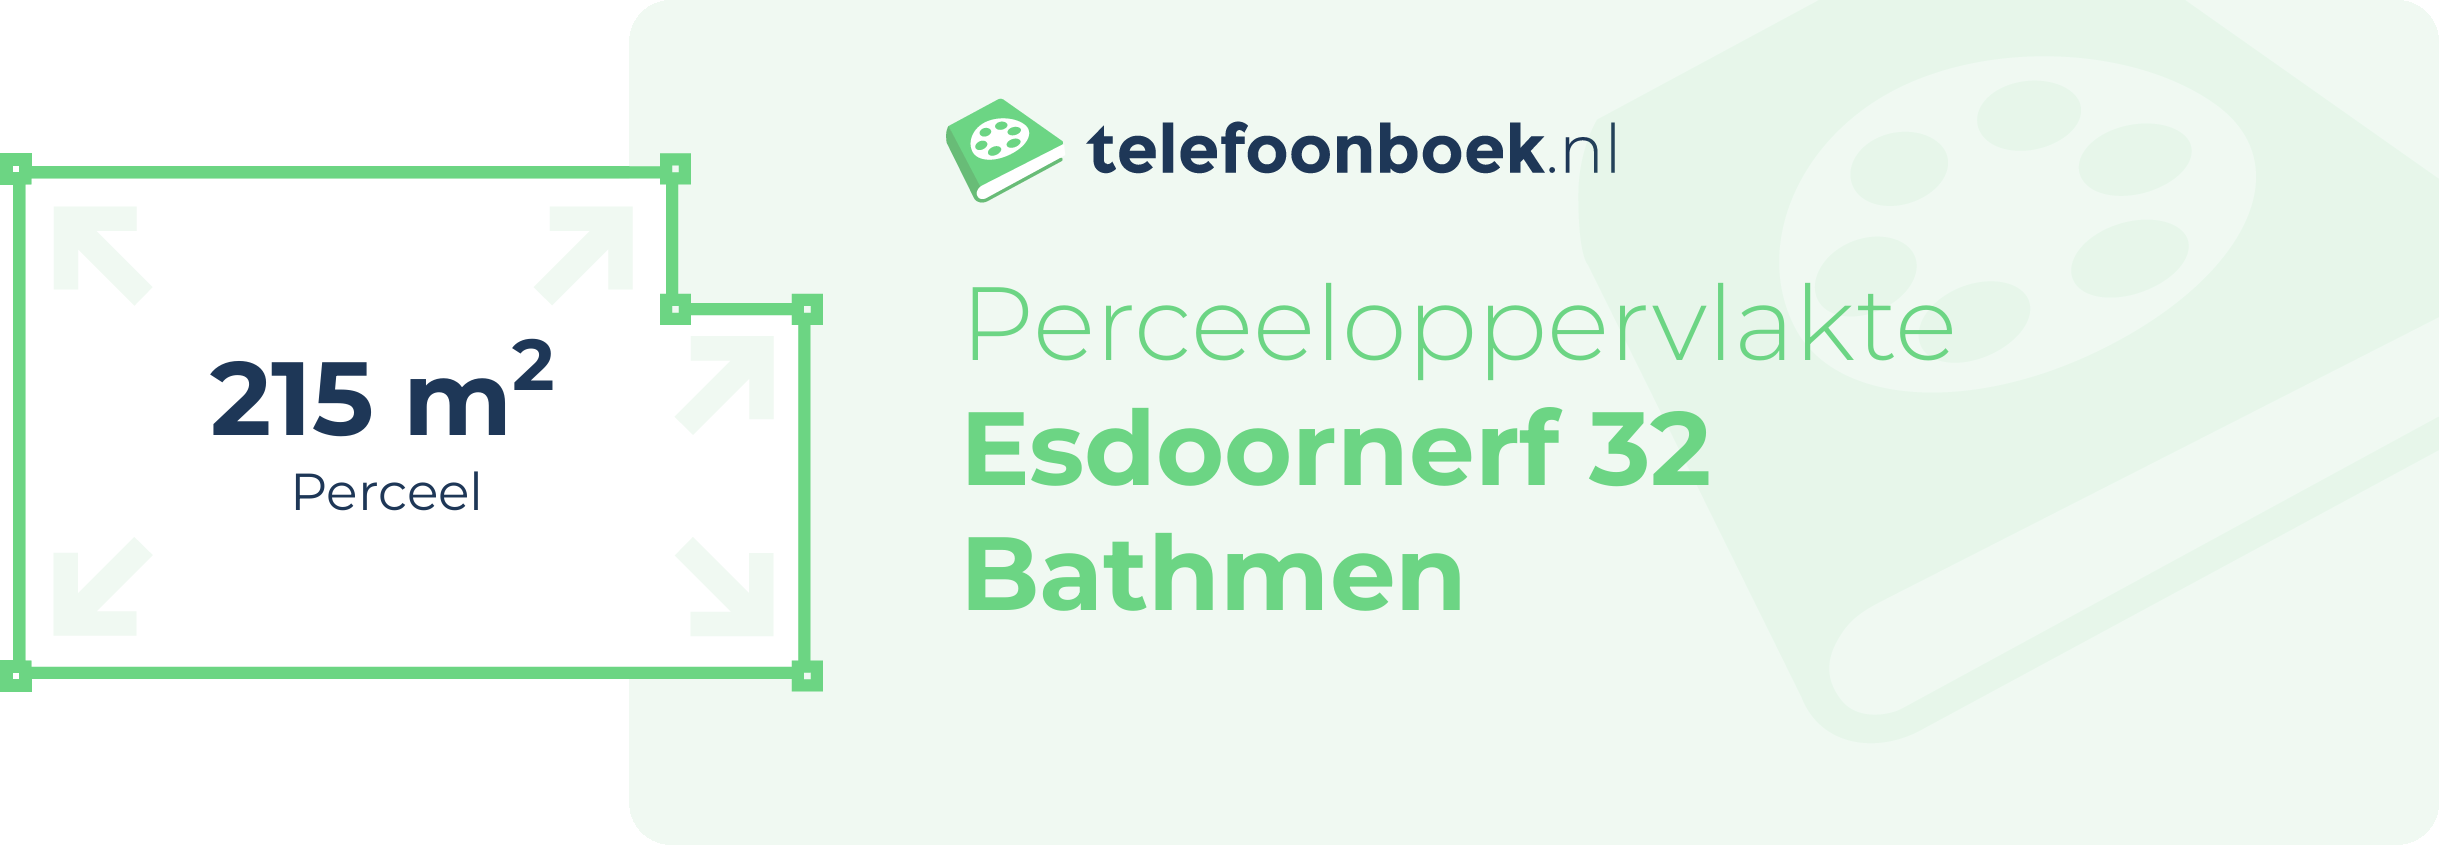 Perceeloppervlakte Esdoornerf 32 Bathmen